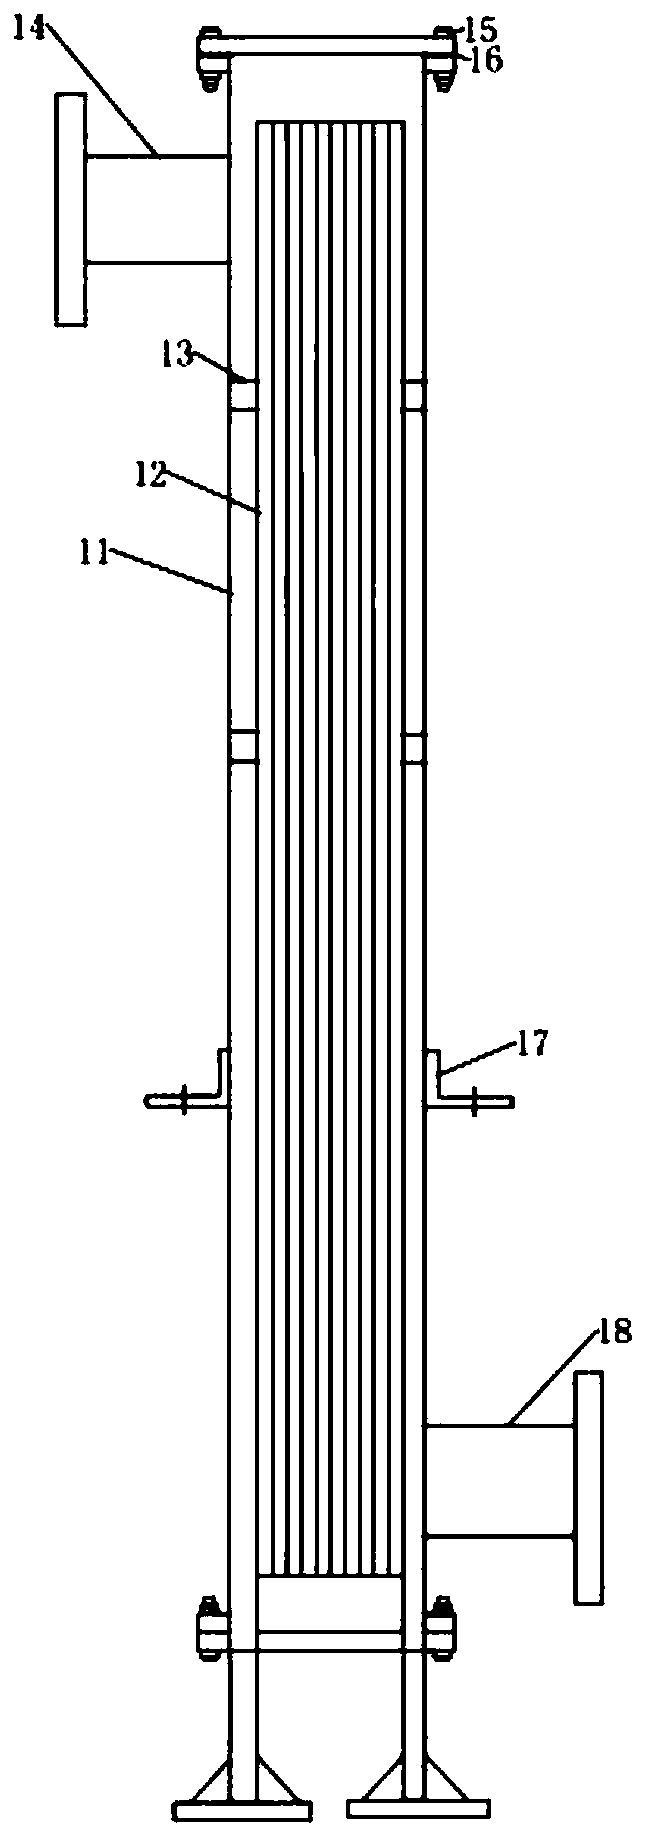 Method for producing adiponitrile through acrylonitrile electrolysis dimerization method